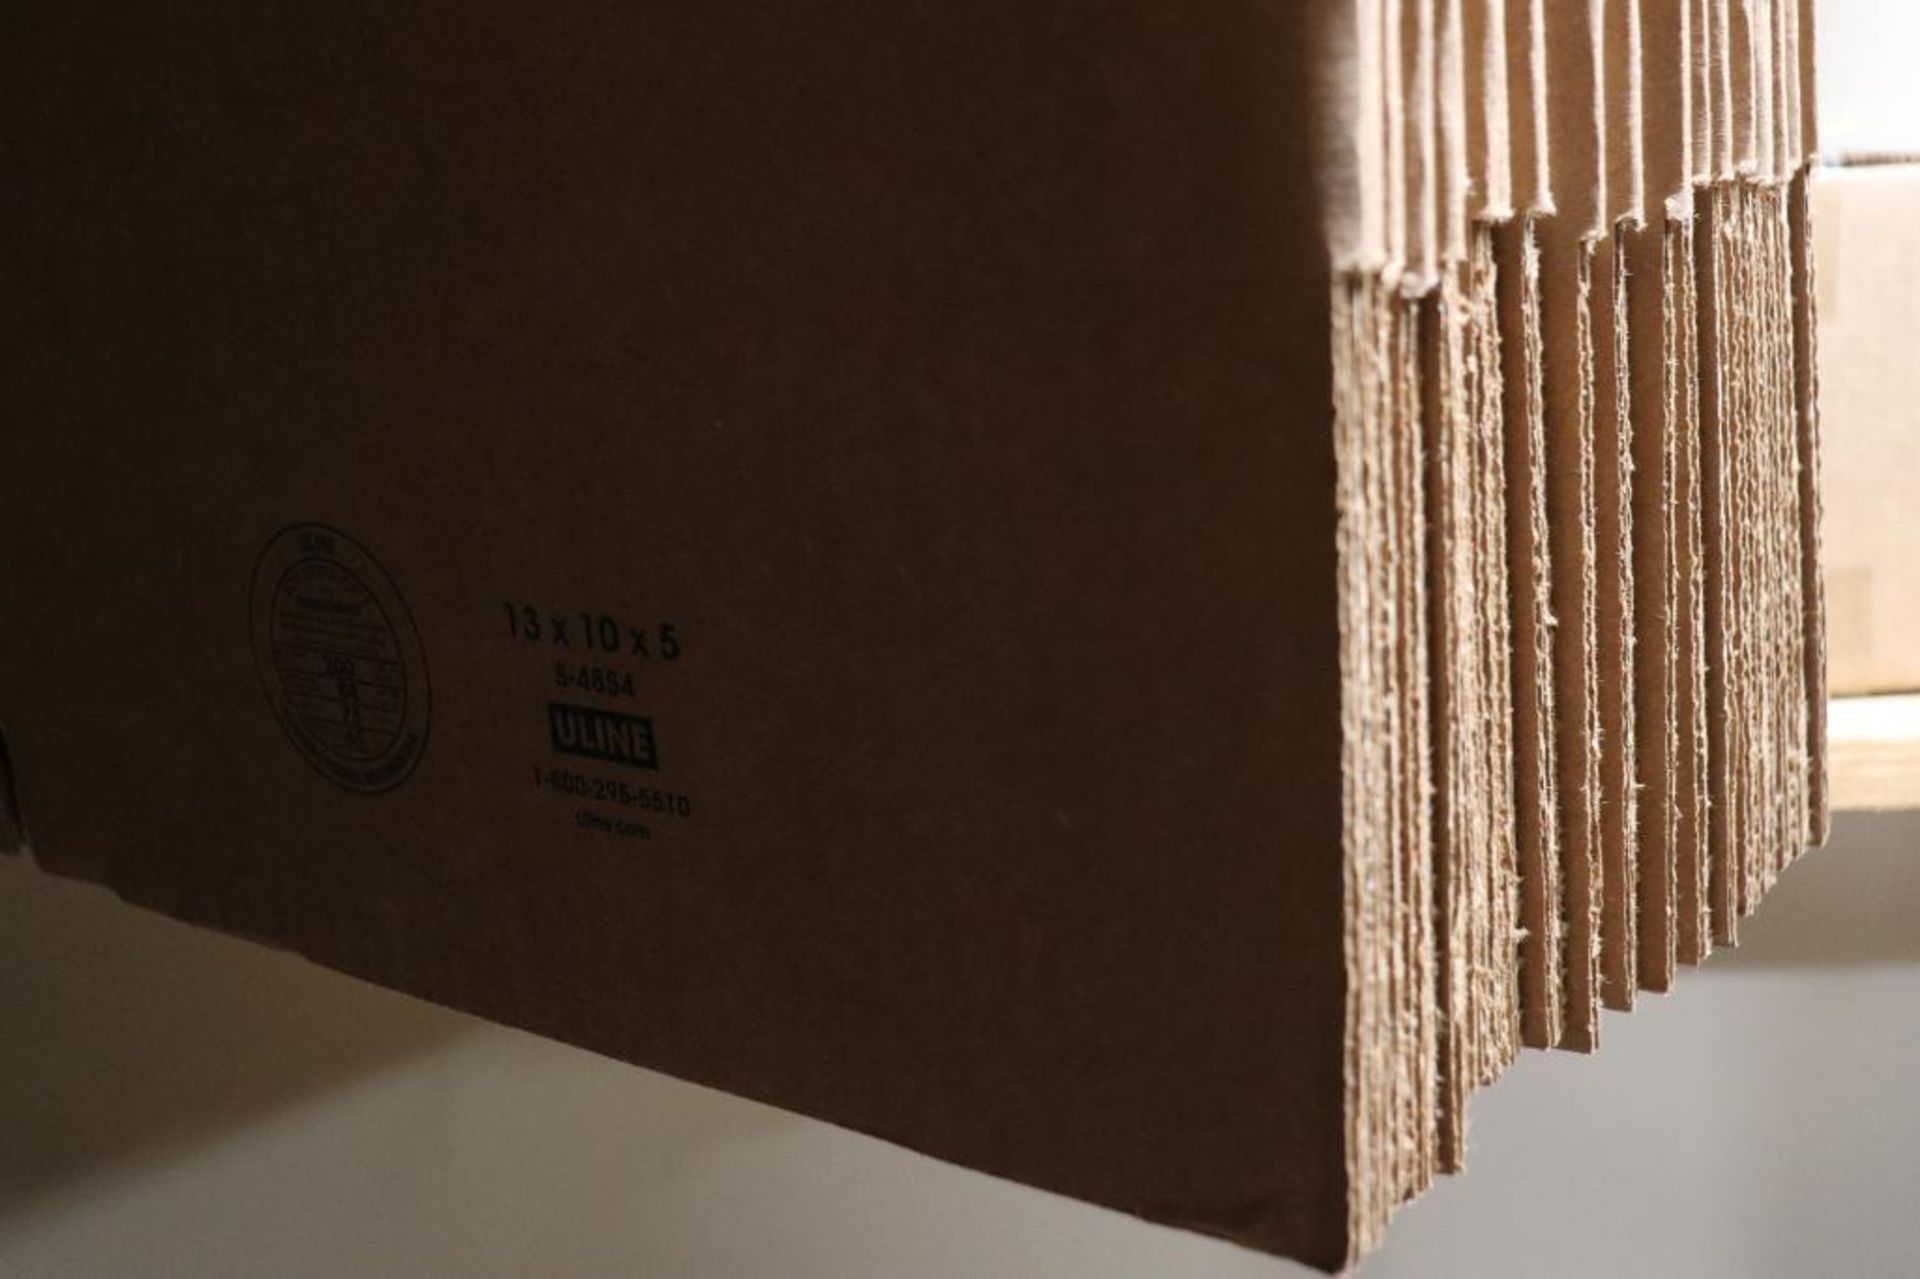 Uline cardboard boxes - Image 6 of 25